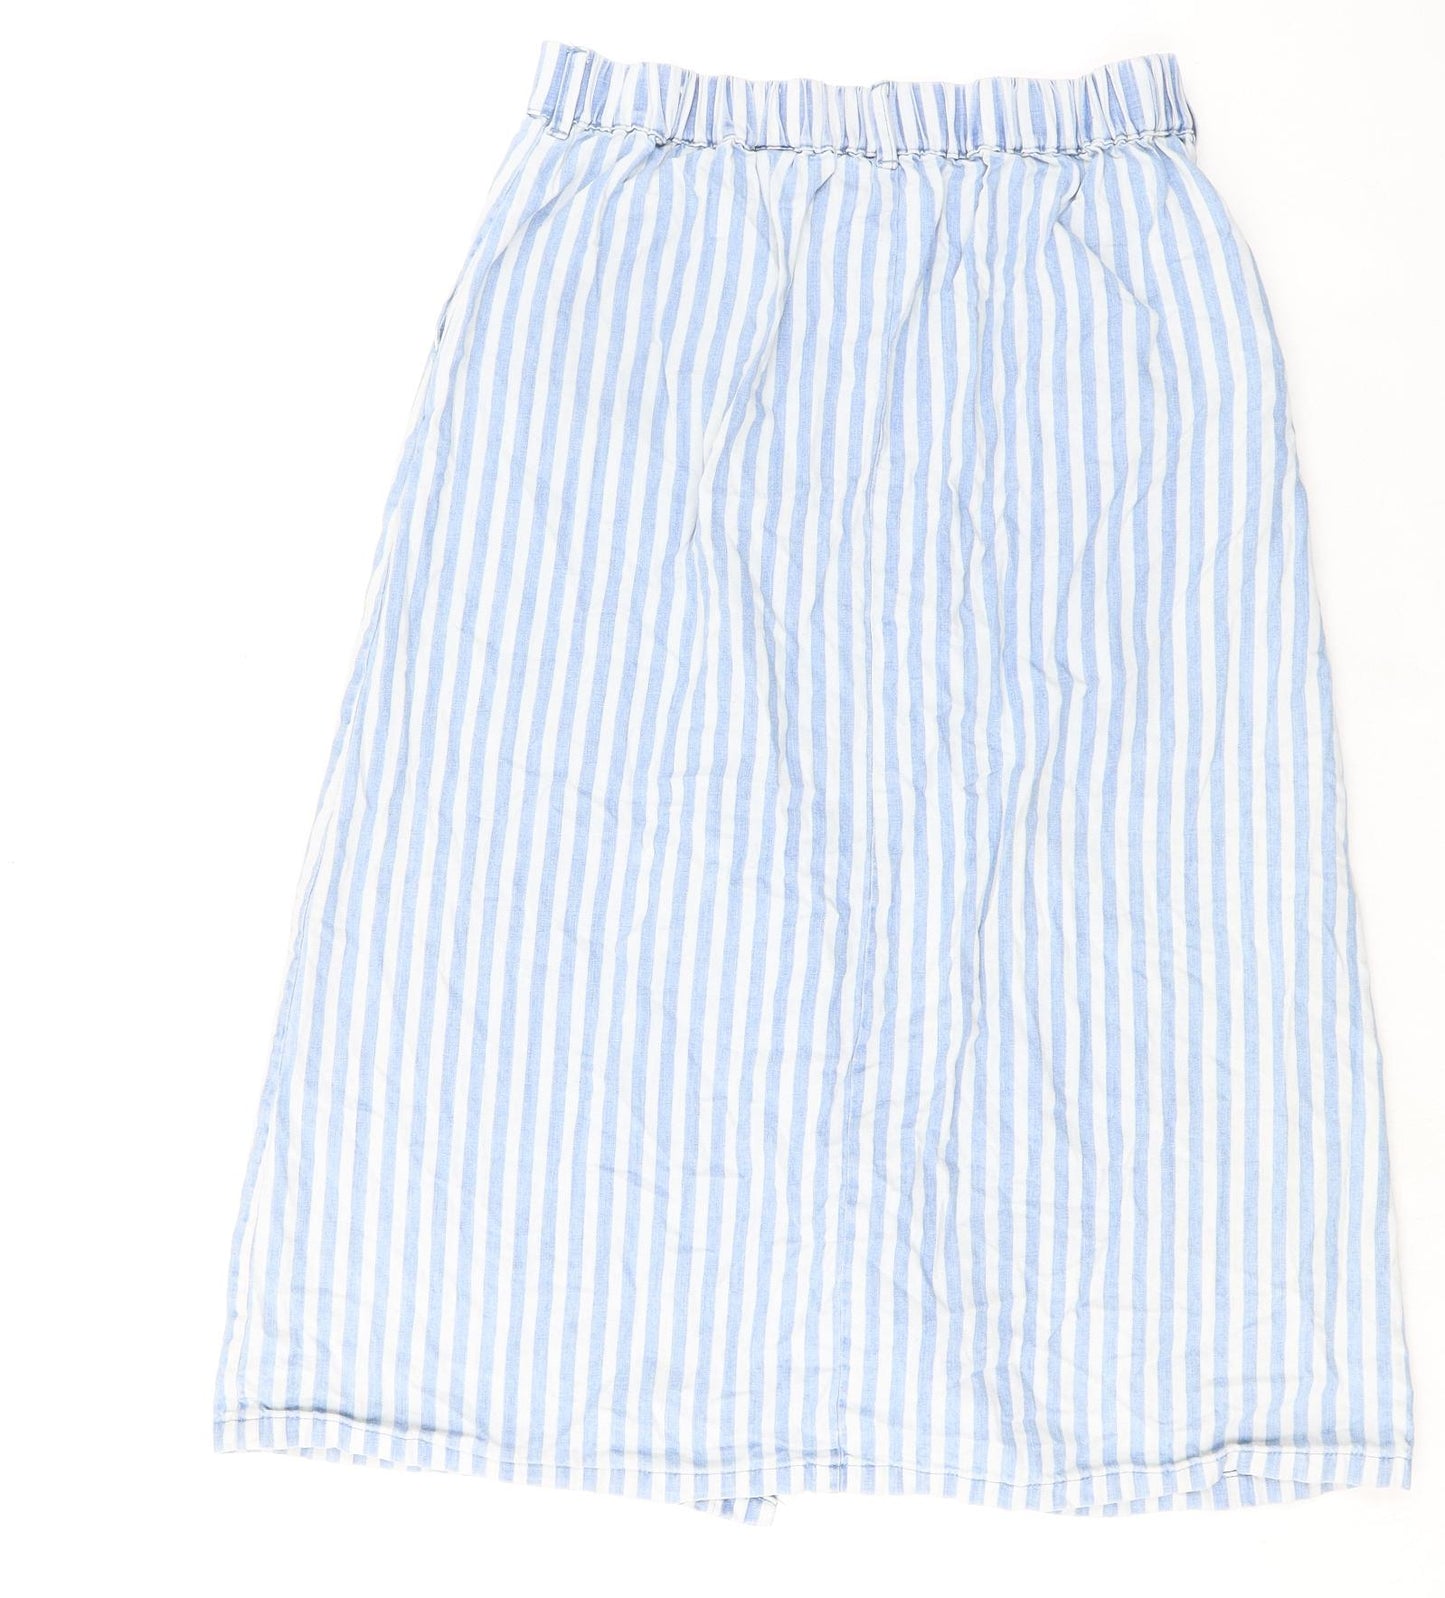 NEXT Womens Black Striped Cotton A-Line Skirt Size 10 Button